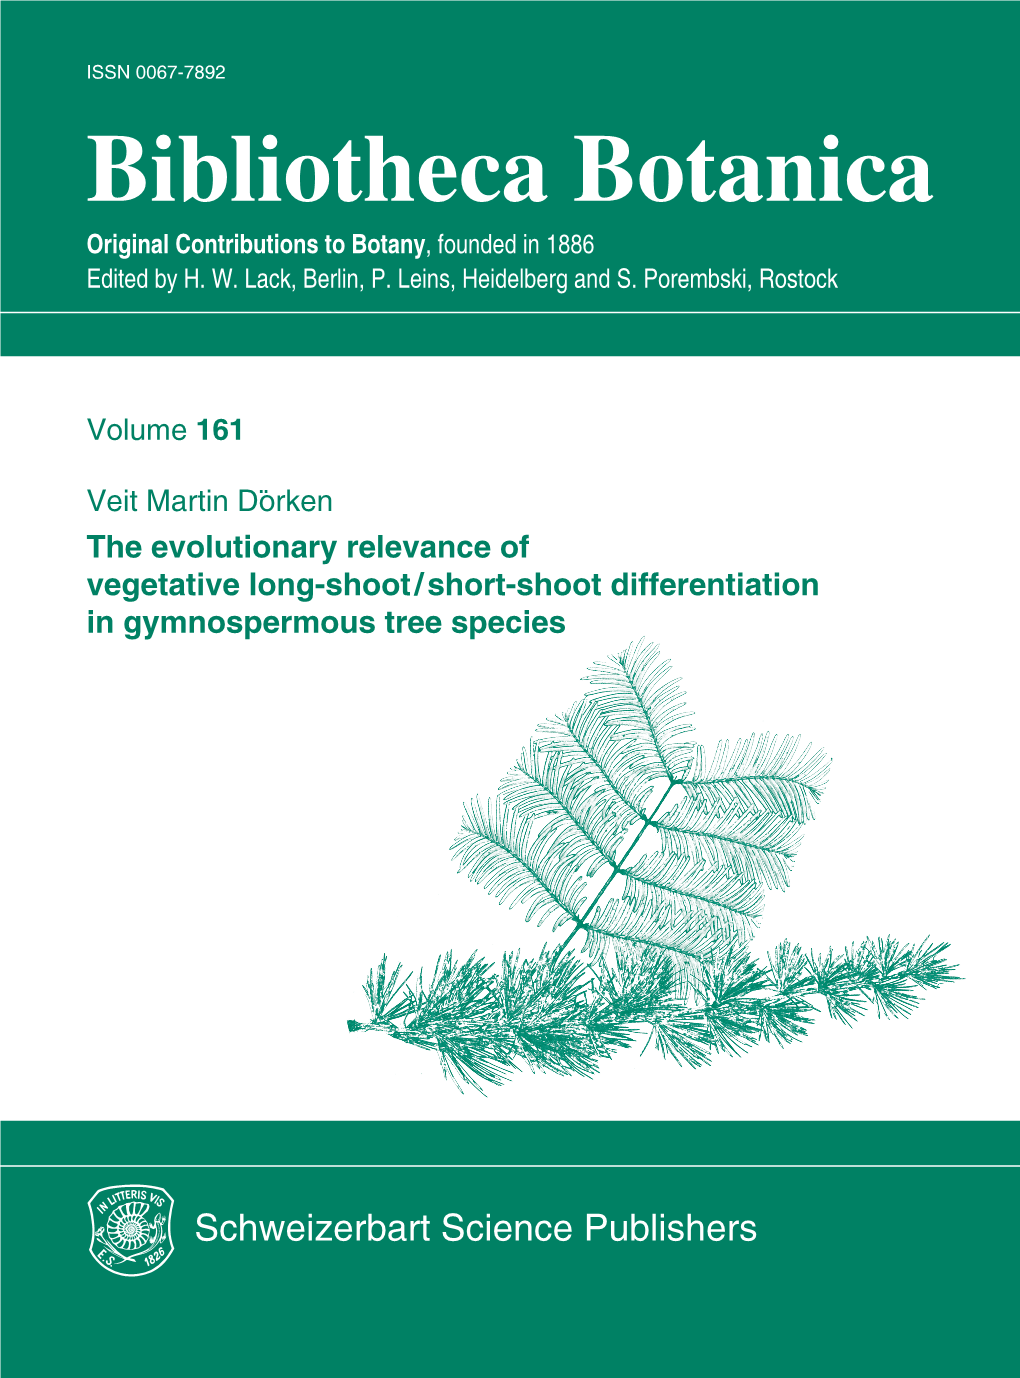 Bibliotheca Botanica 161 ISSN 0067-7892 Bibliotheca Botanica Bibliotheca Botanica, Volume 161, 2012 Original Contributions to Botany, Founded in 1886 V